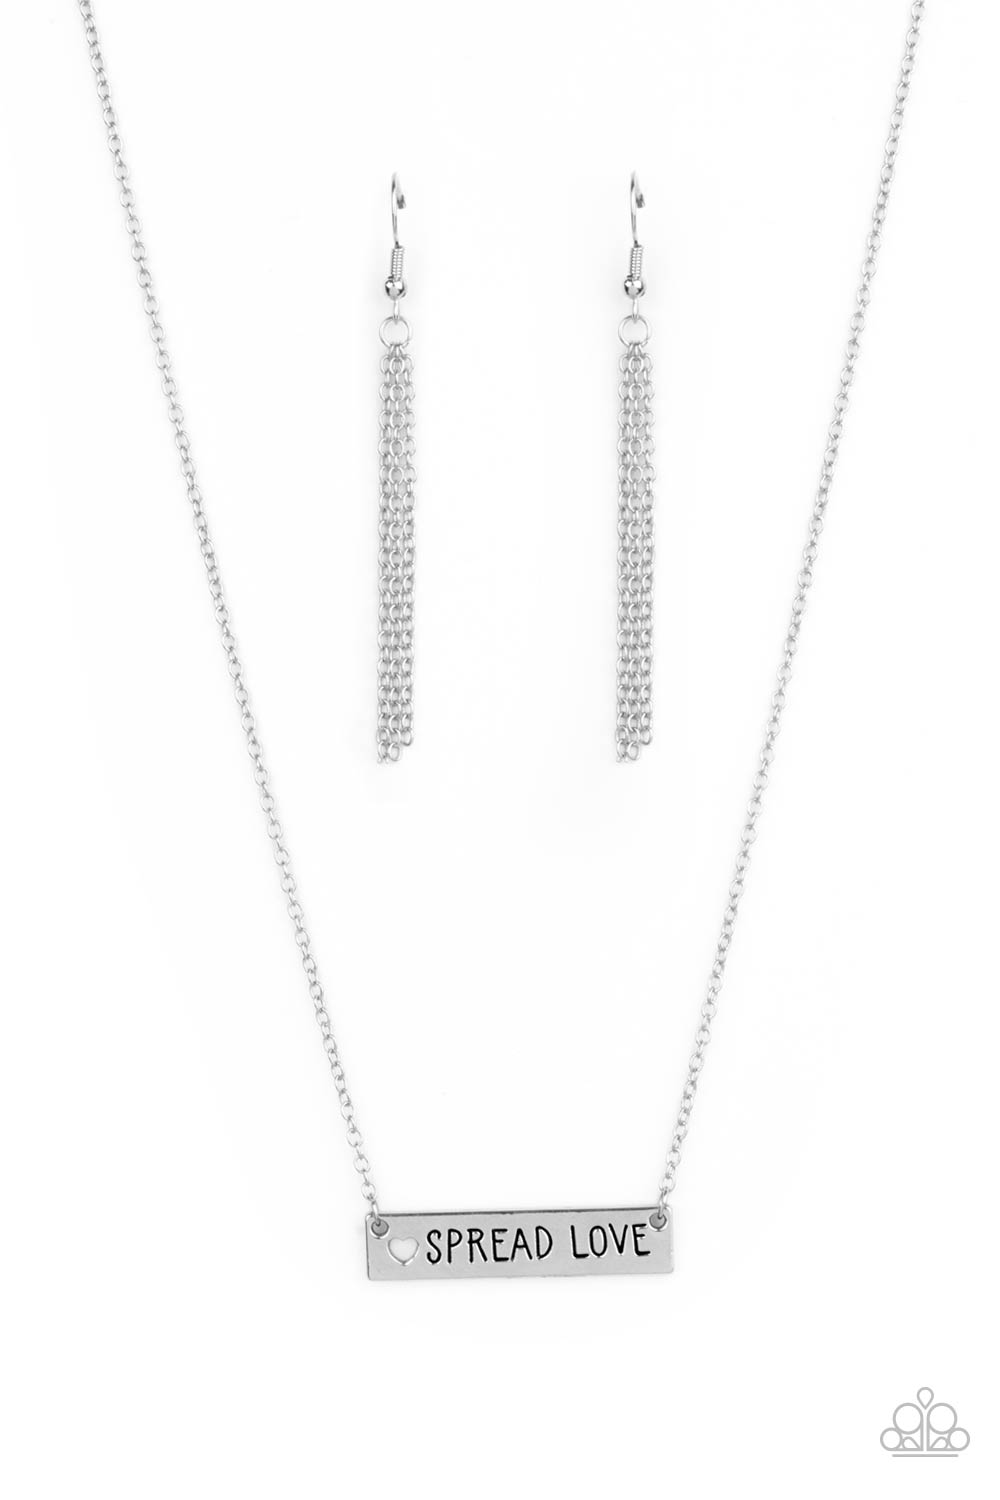 Spread Love - Silver necklace B049